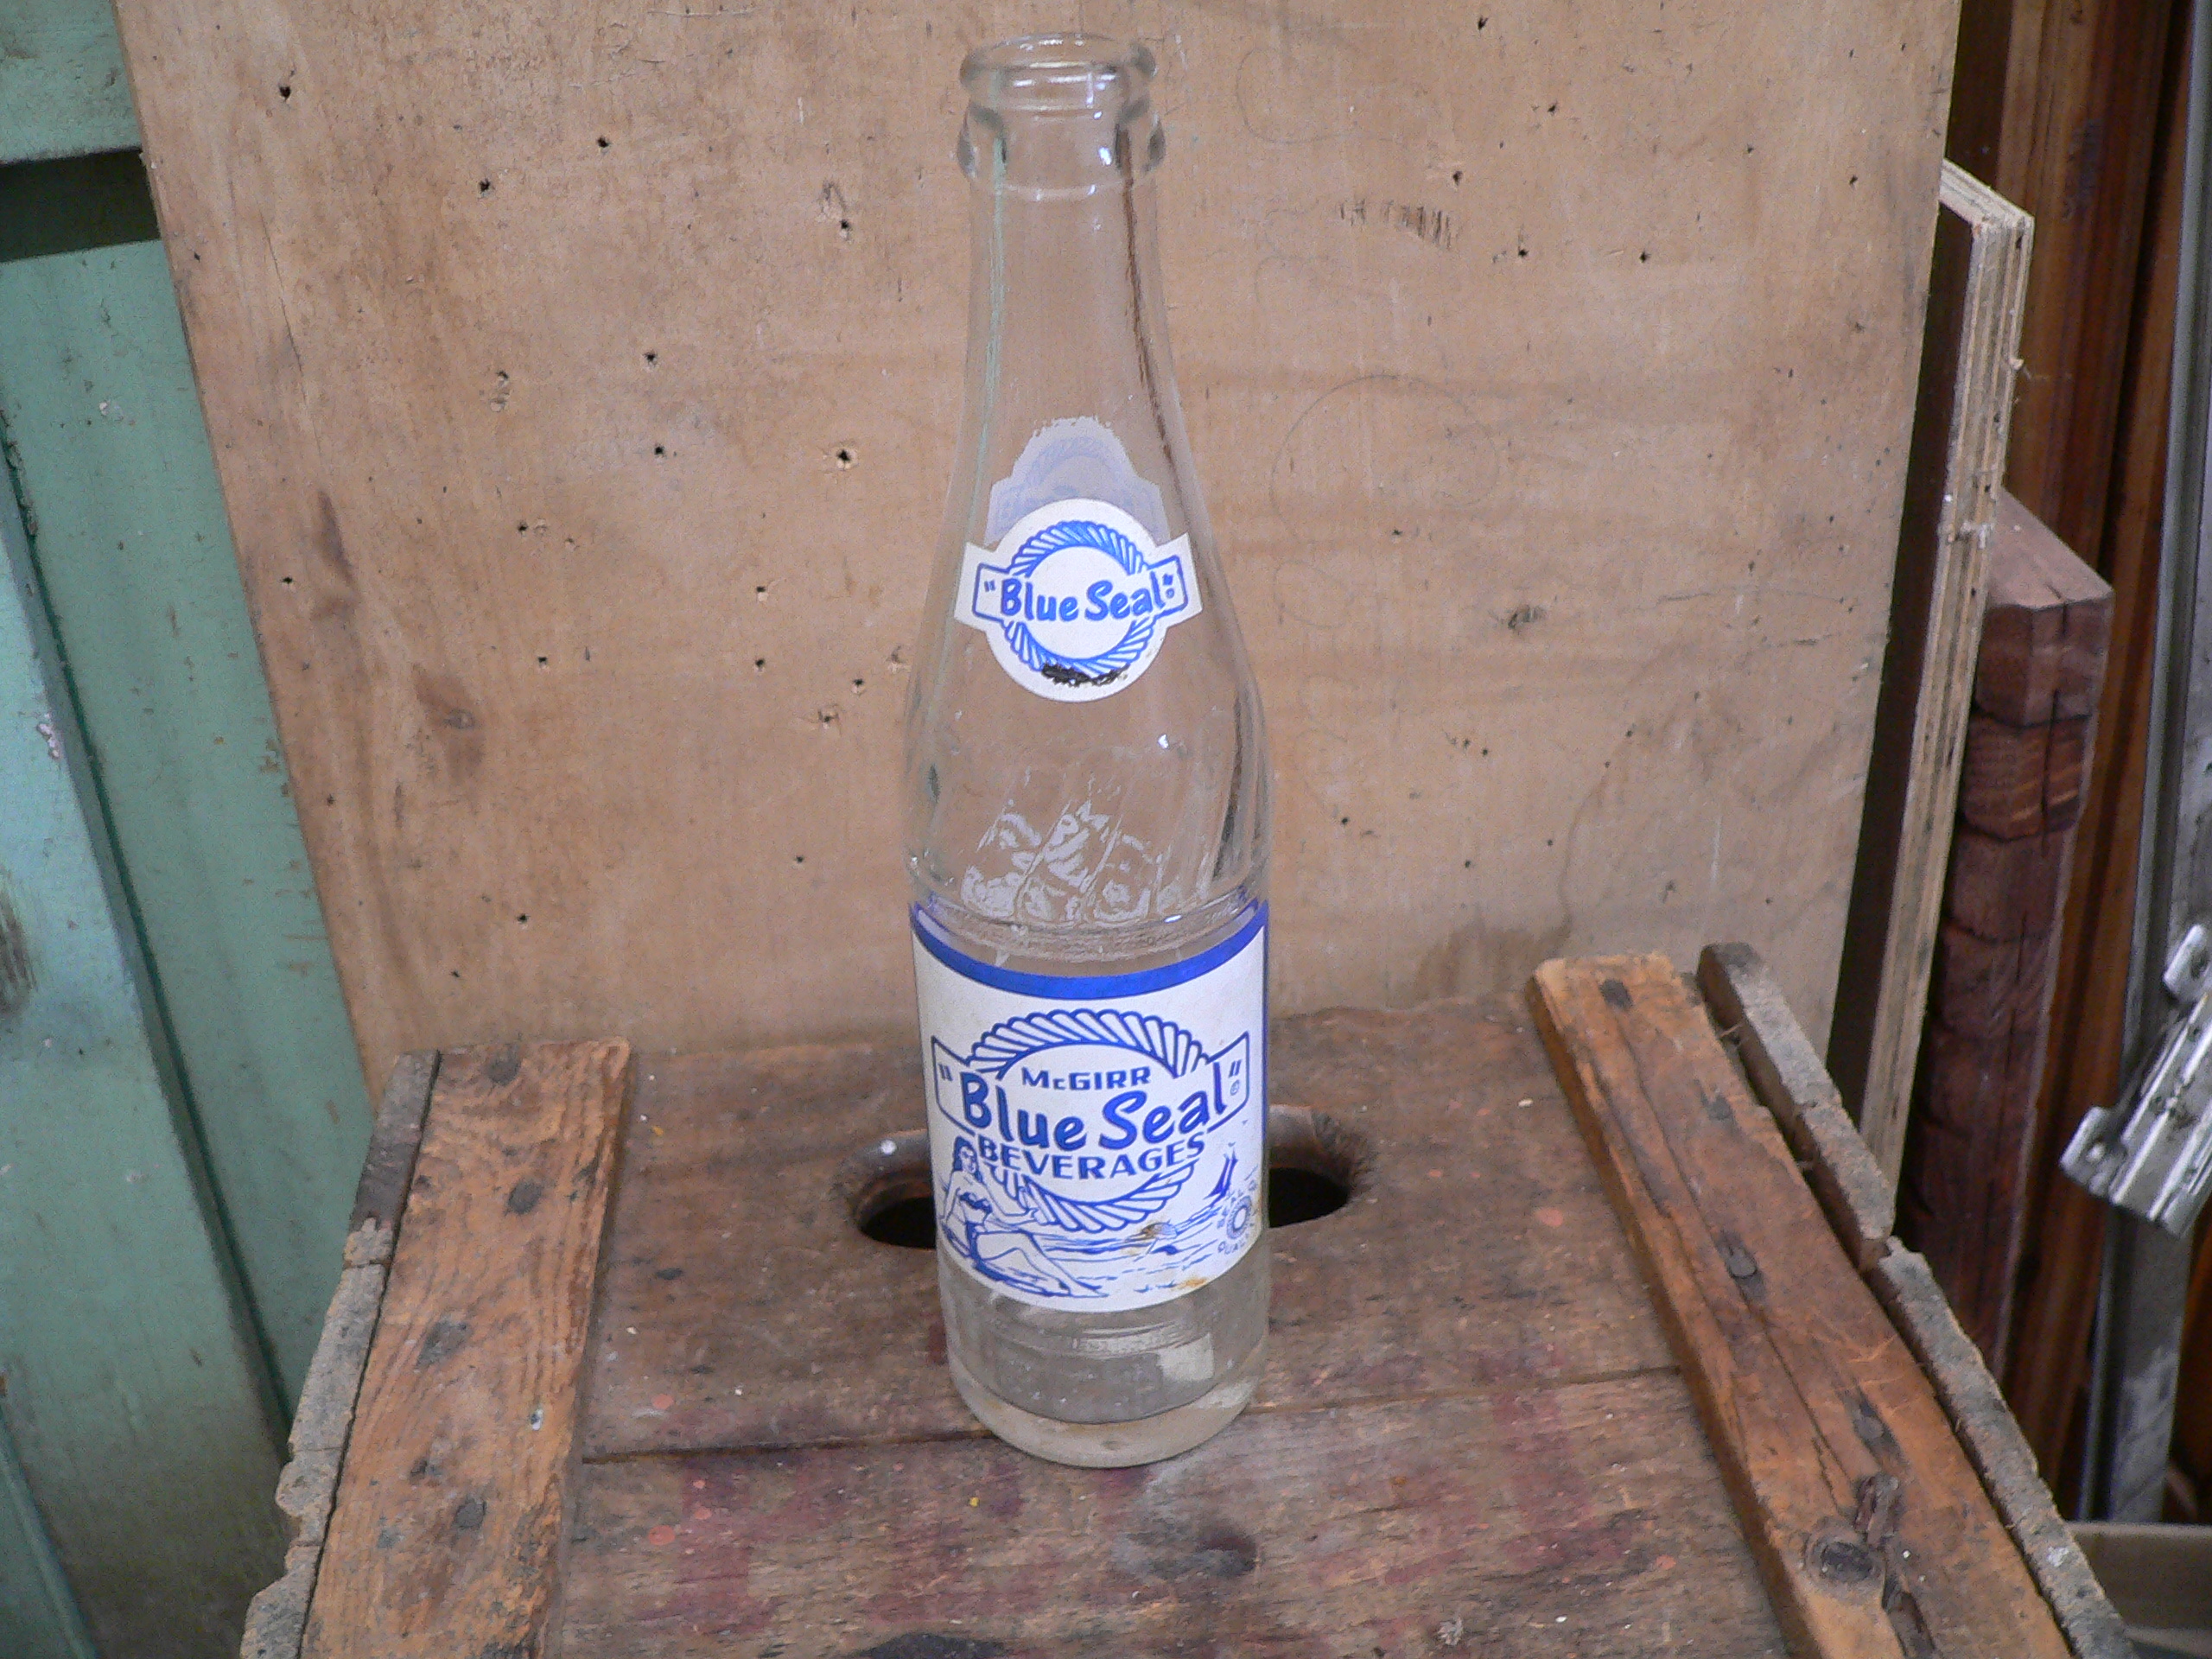 Bouteille blue seal beverages # 5717.2